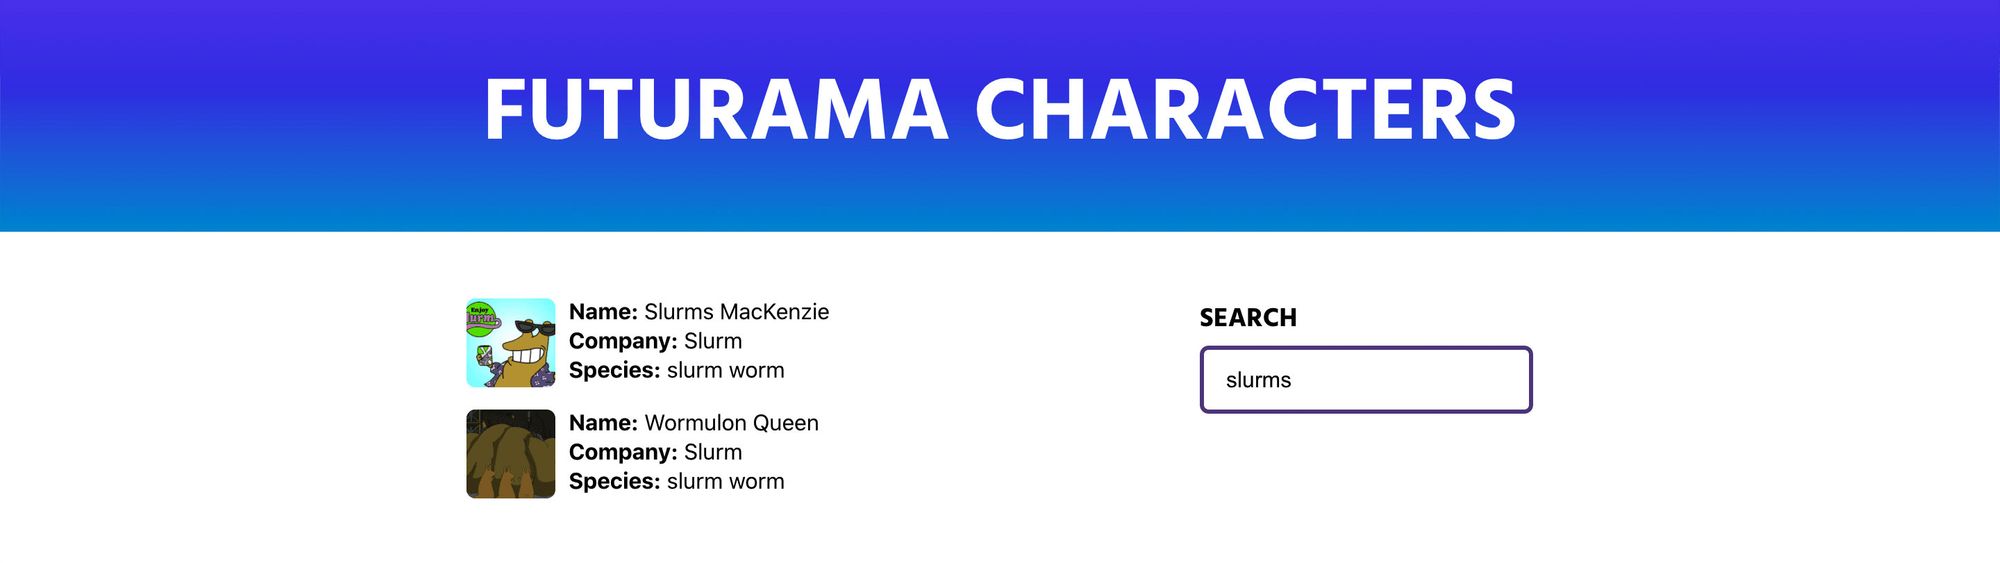 futurama-character-search-results